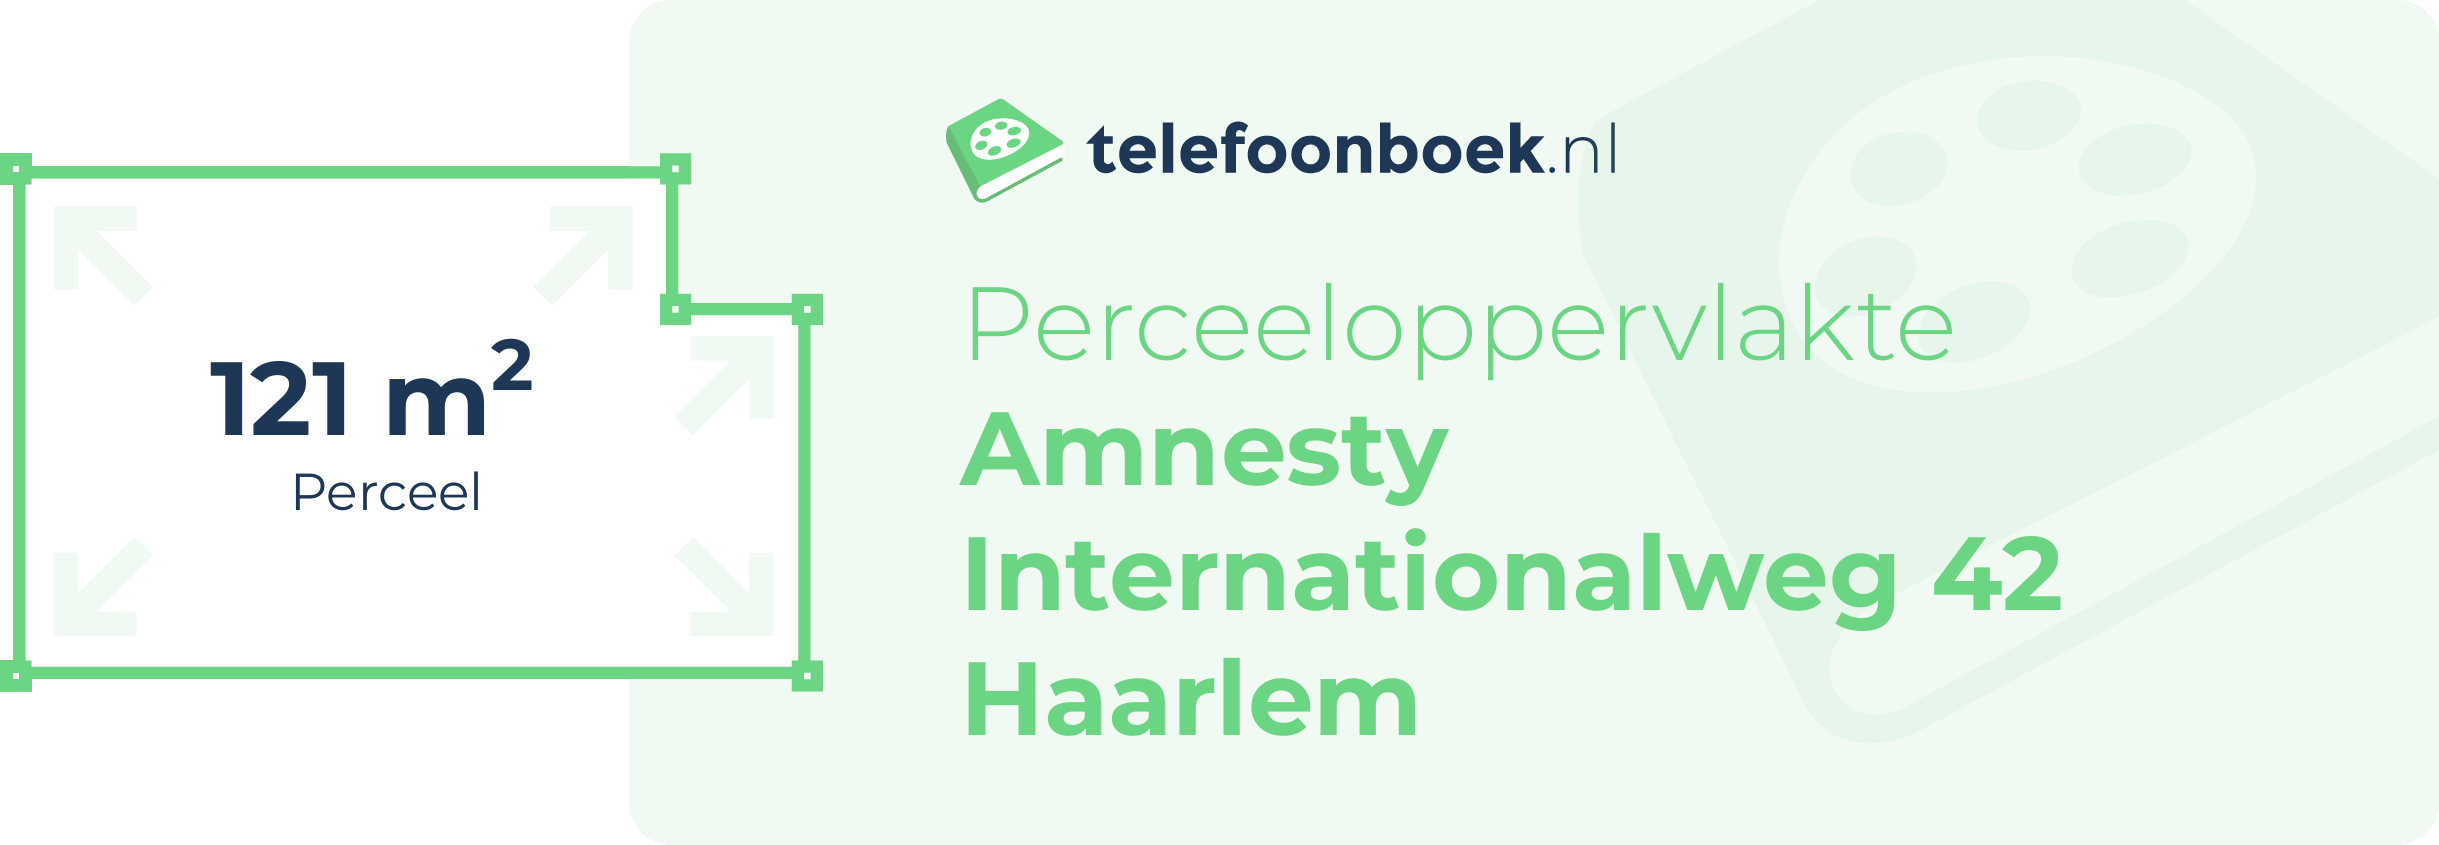 Perceeloppervlakte Amnesty Internationalweg 42 Haarlem